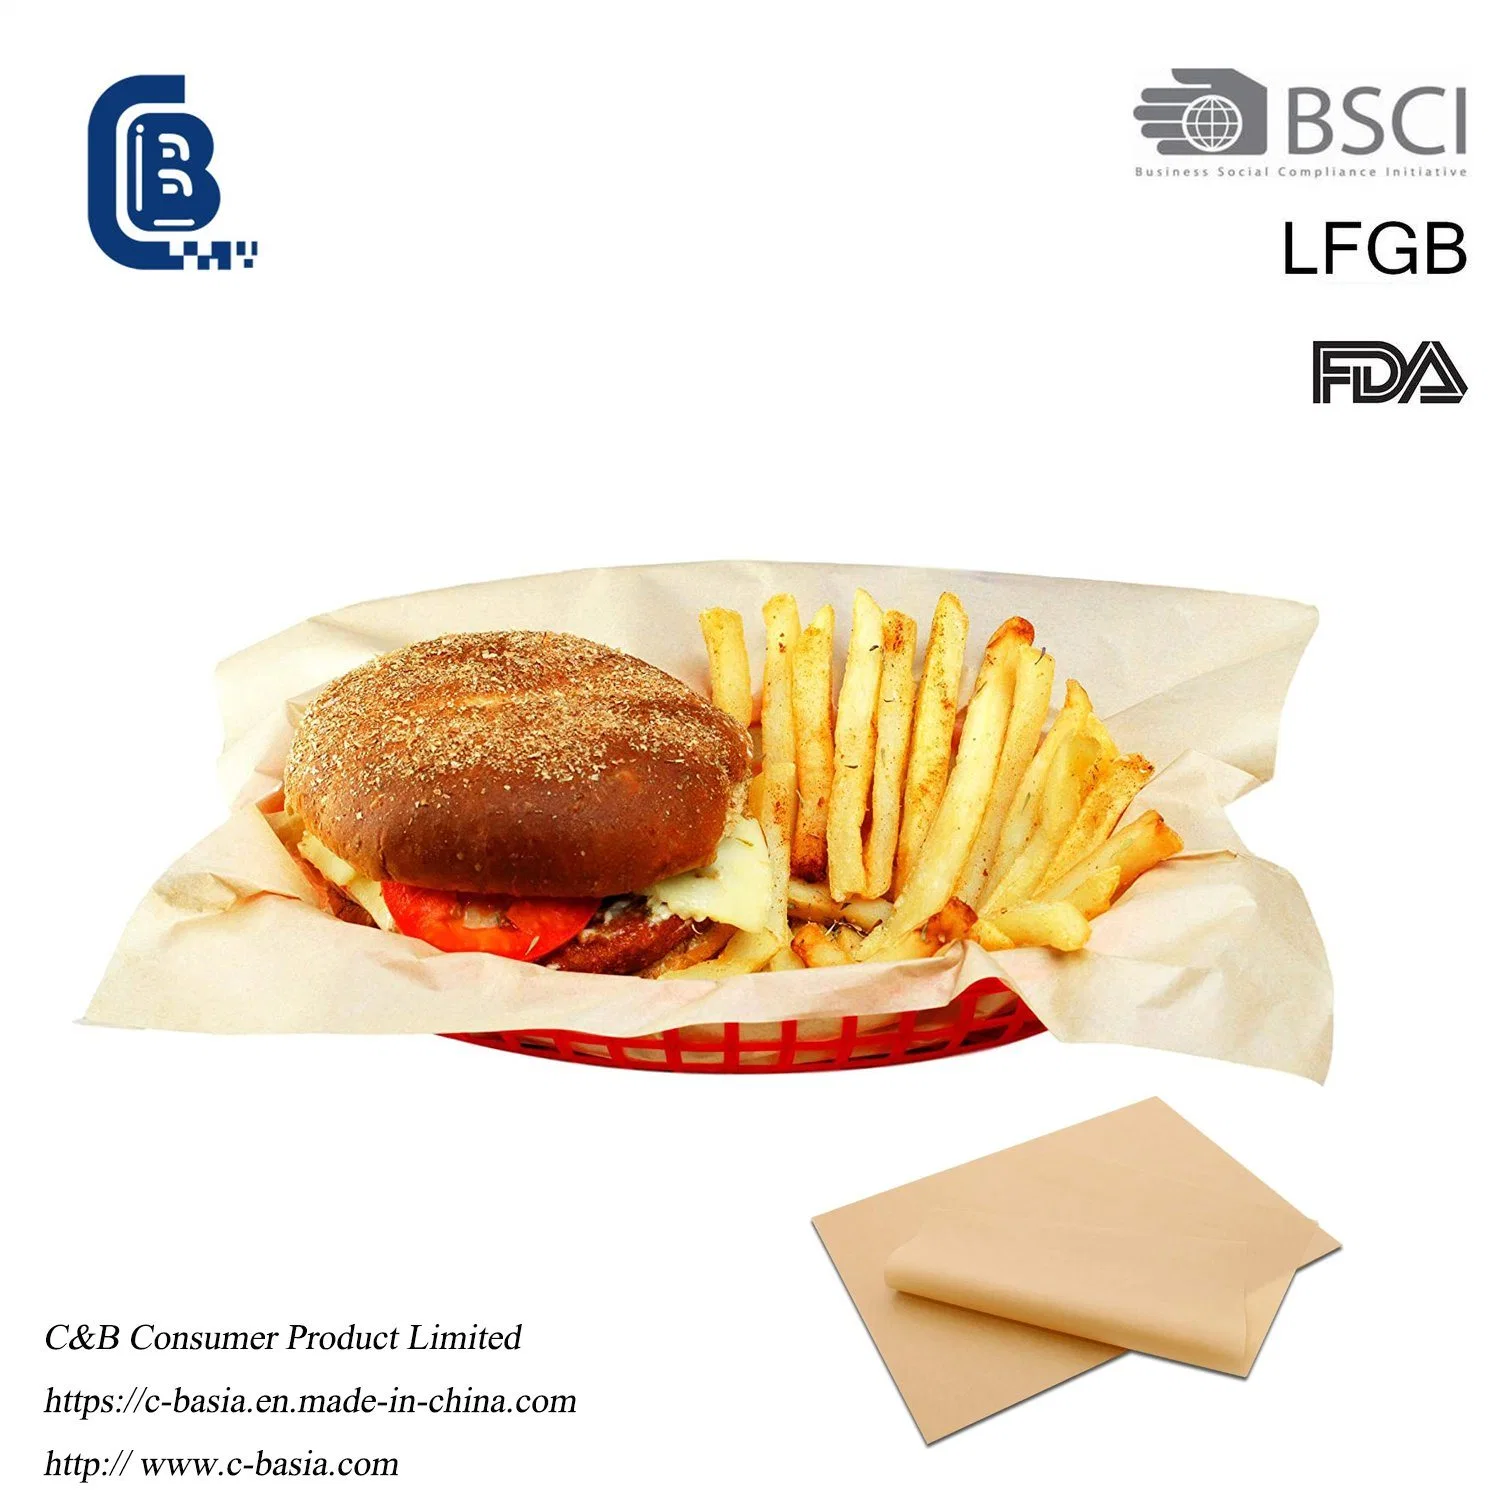 Vorgeschnittenes Burger Pergament Silikonbeschichtete Verpackung Backpapier Brot Verpackungspapier